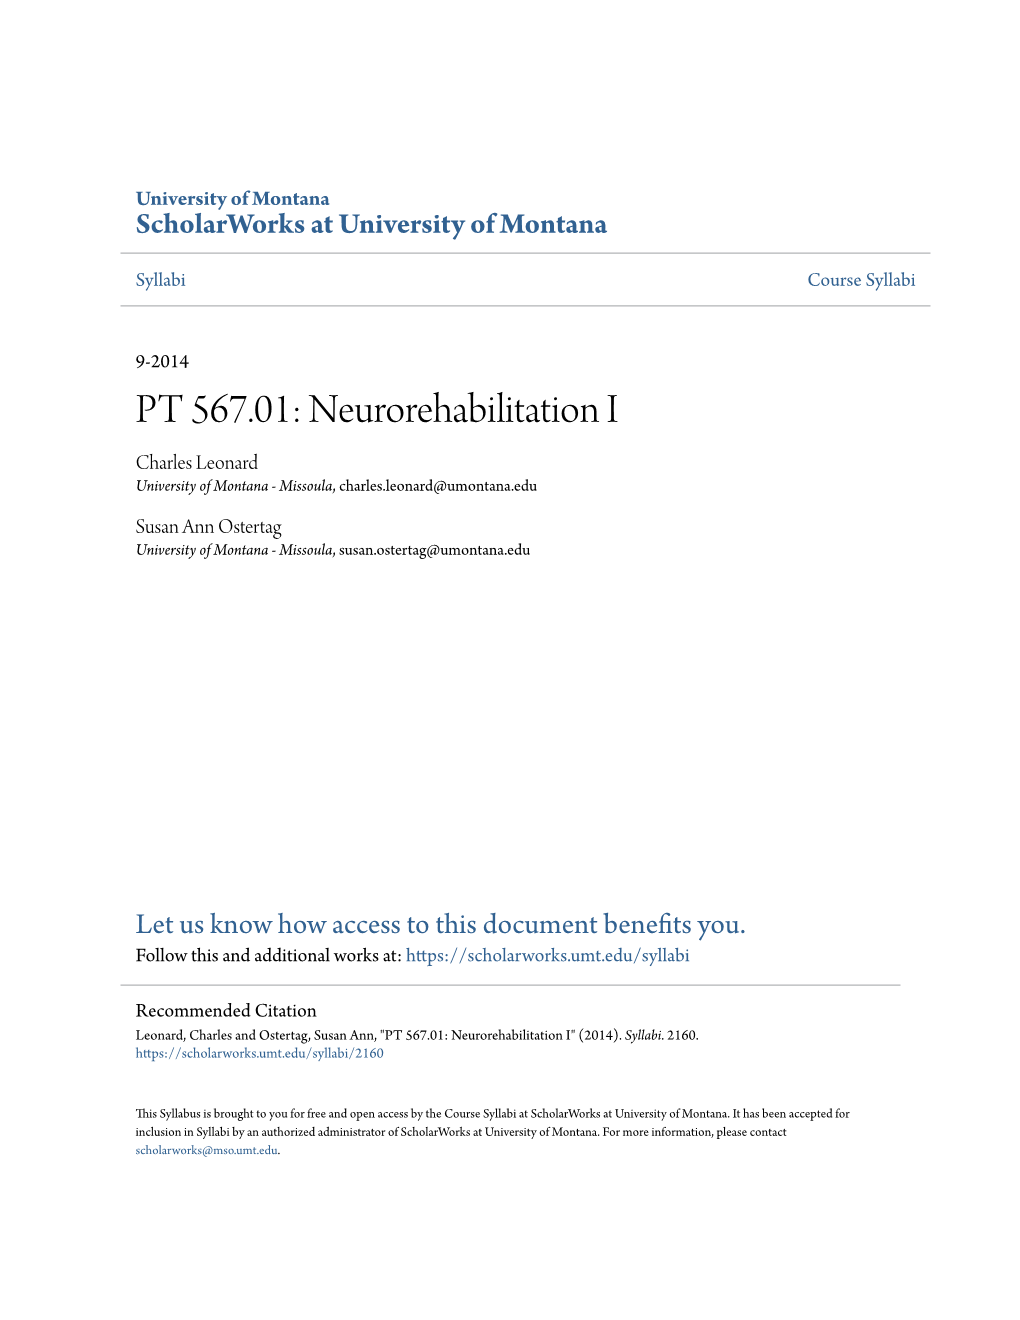 Neurorehabilitation I Charles Leonard University of Montana - Missoula, Charles.Leonard@Umontana.Edu